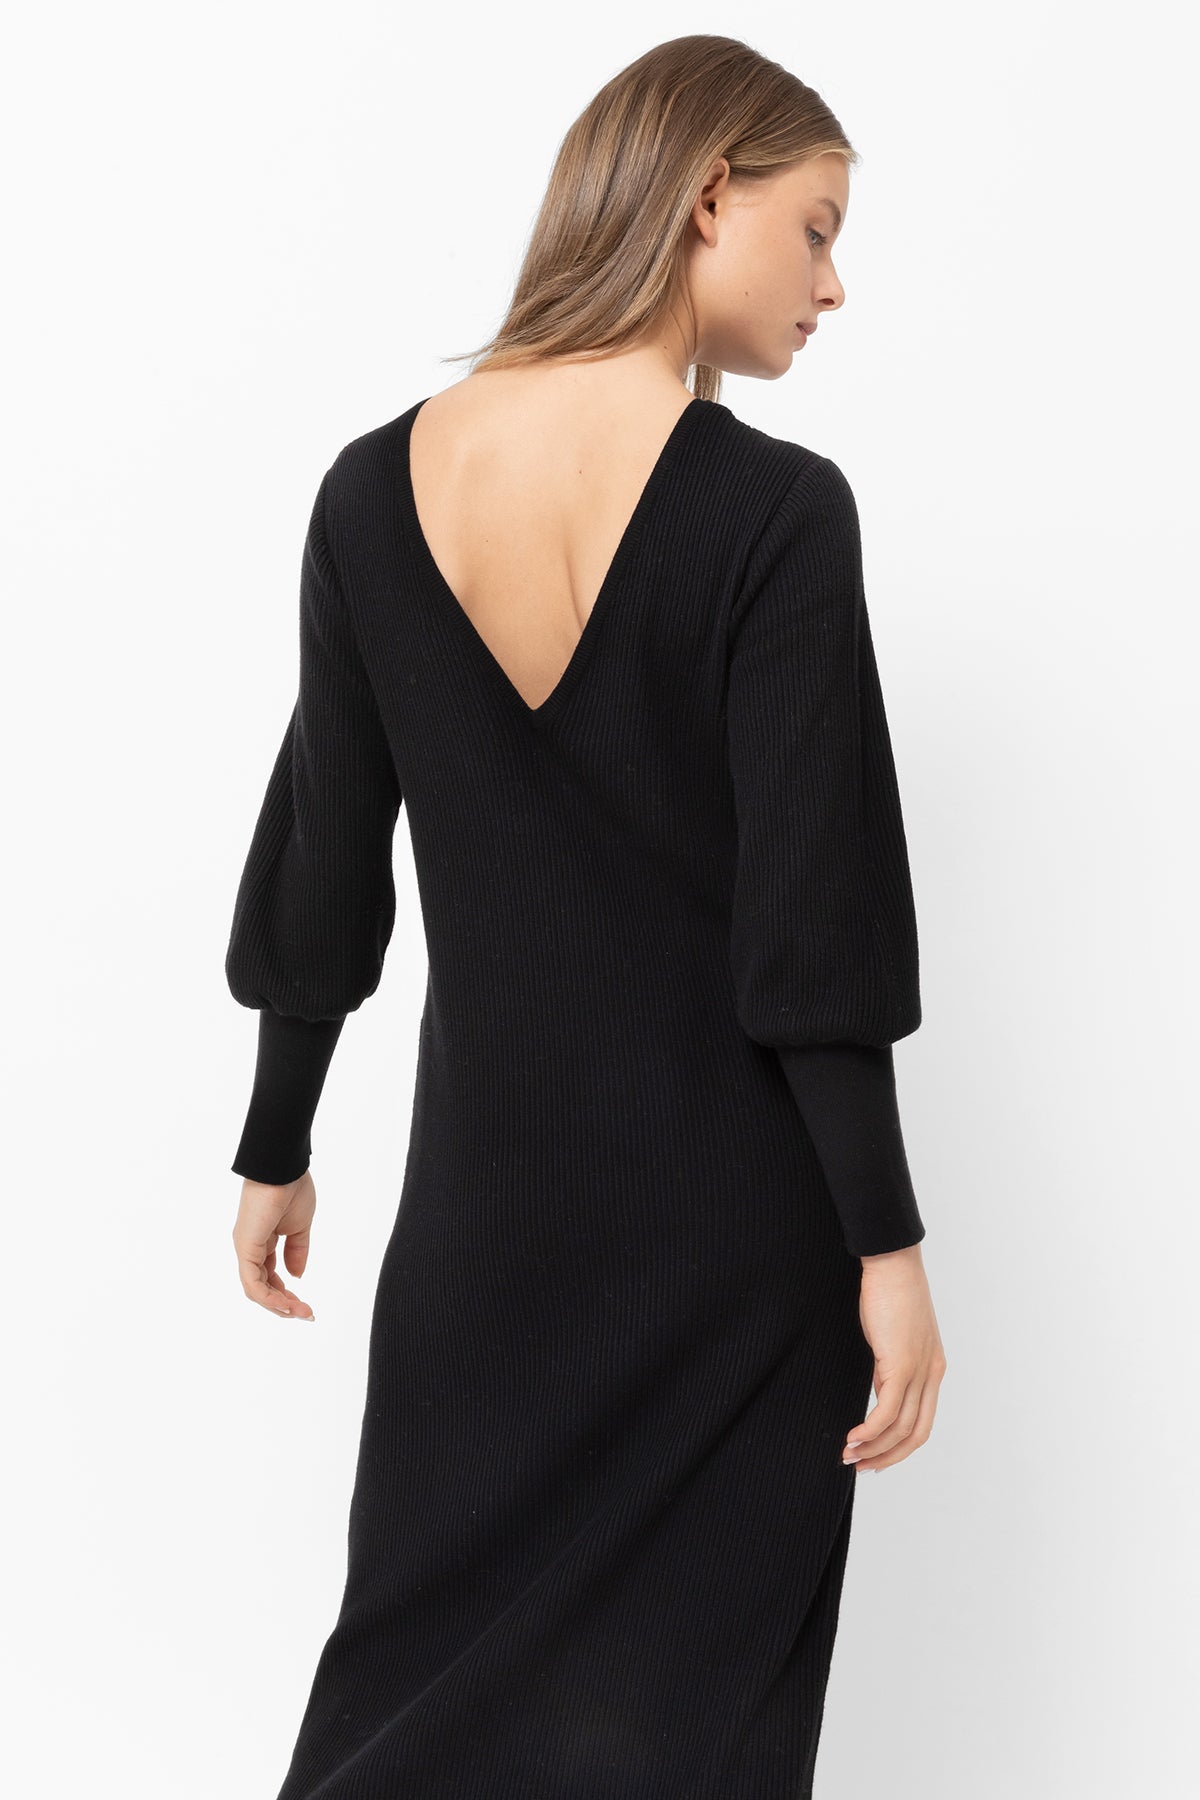 Hariette Knitted Dress | Black